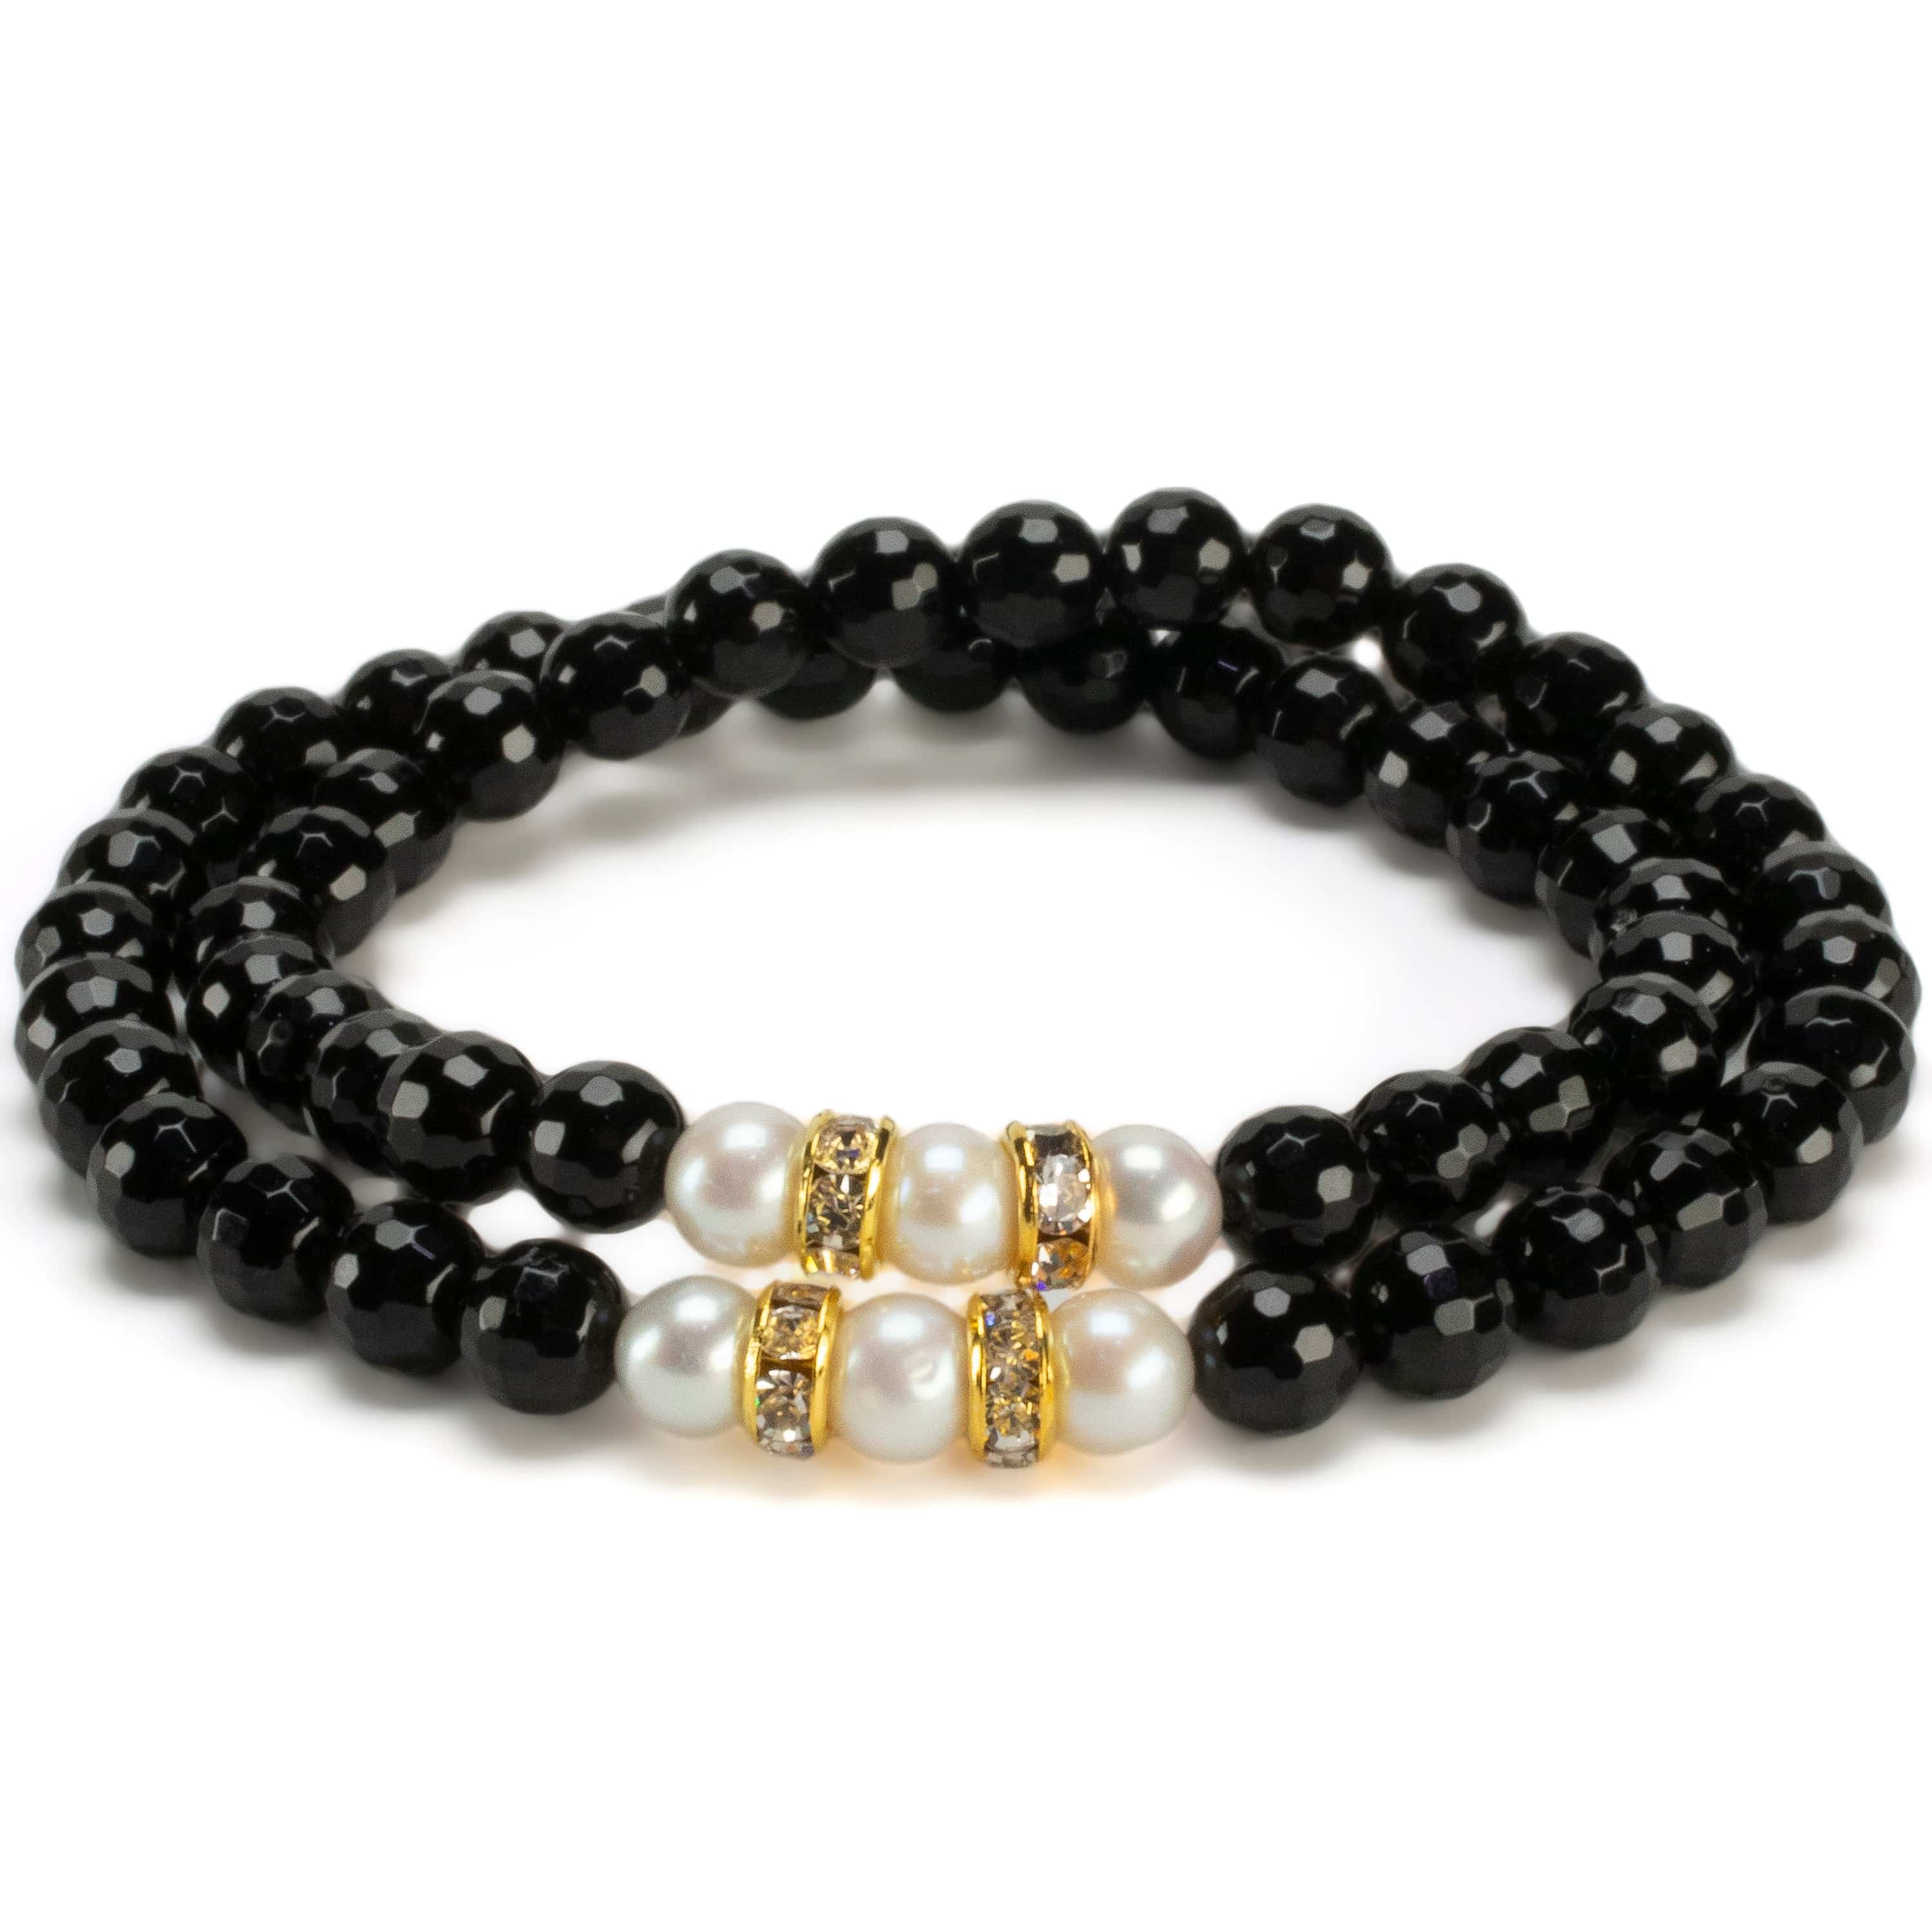 Kalifano Gemstone Bracelets Faceted Black Agate 6mm Beads with Pearl & Gold Accent Beads Double Wrap Elastic Gemstone Bracelet WHITE-BGI2-042